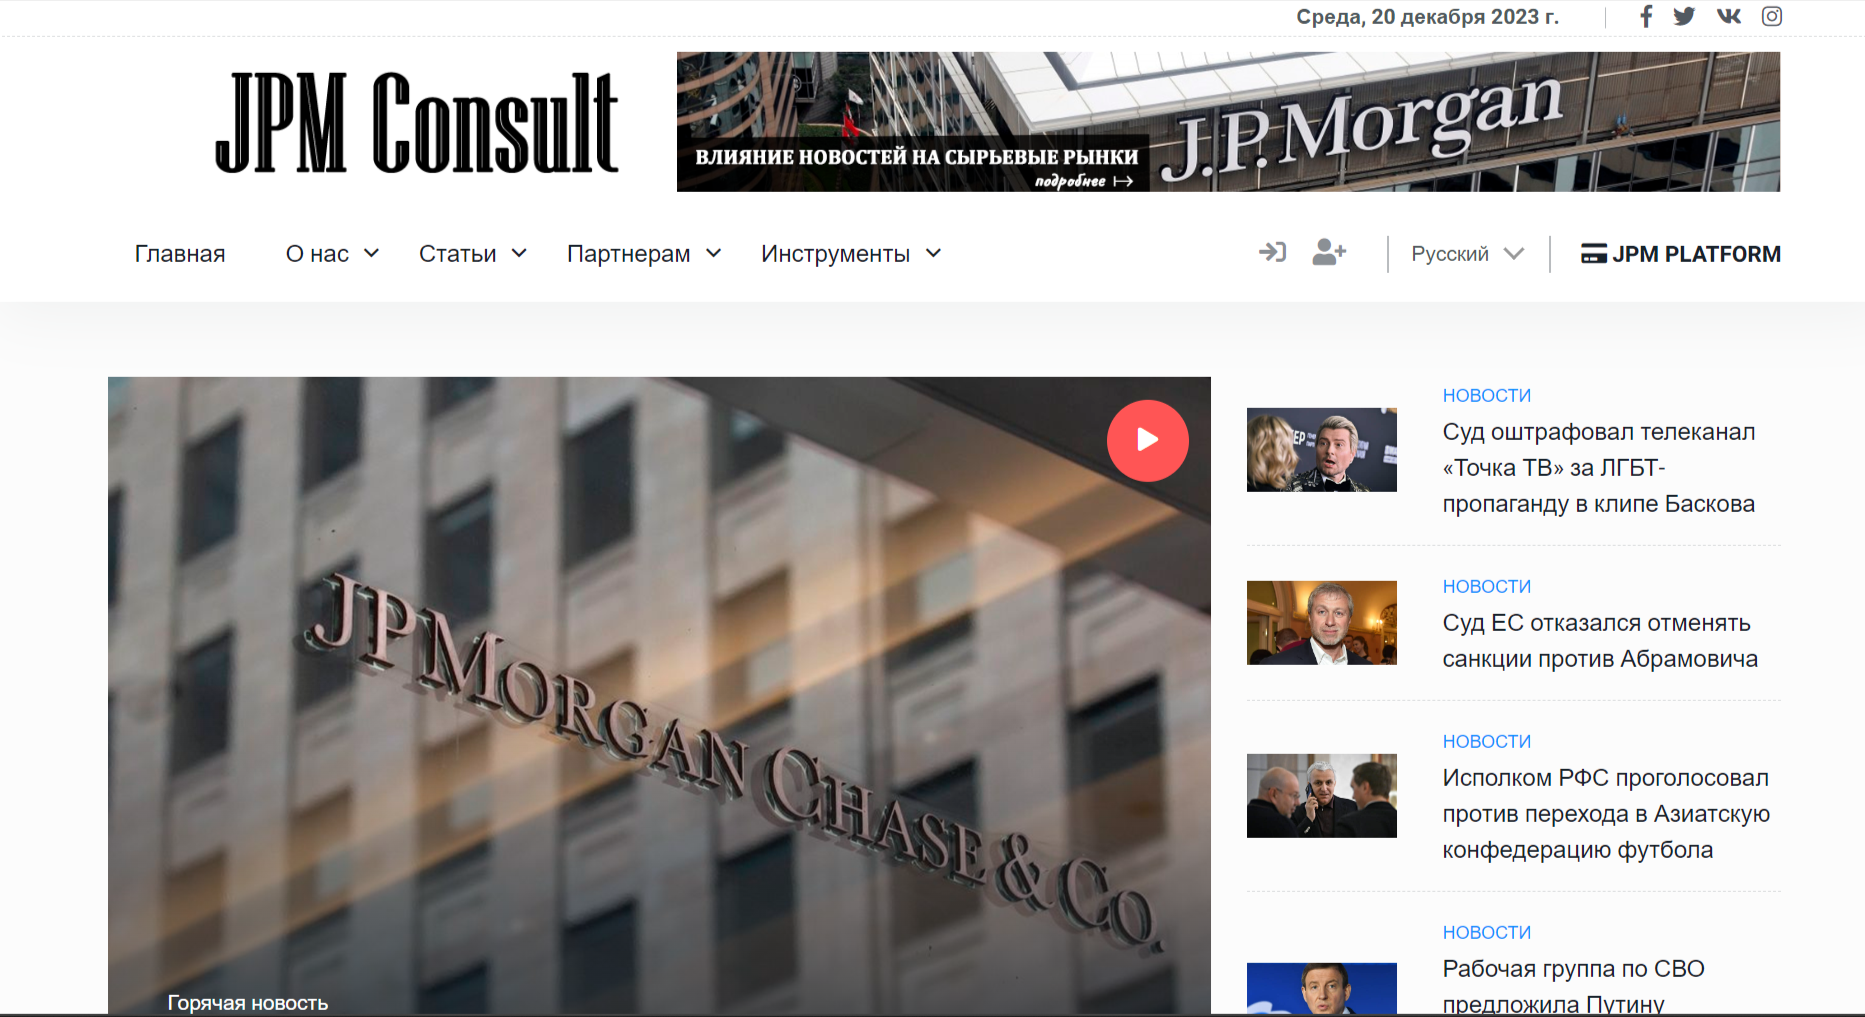 JPM Consult - официальный сайт